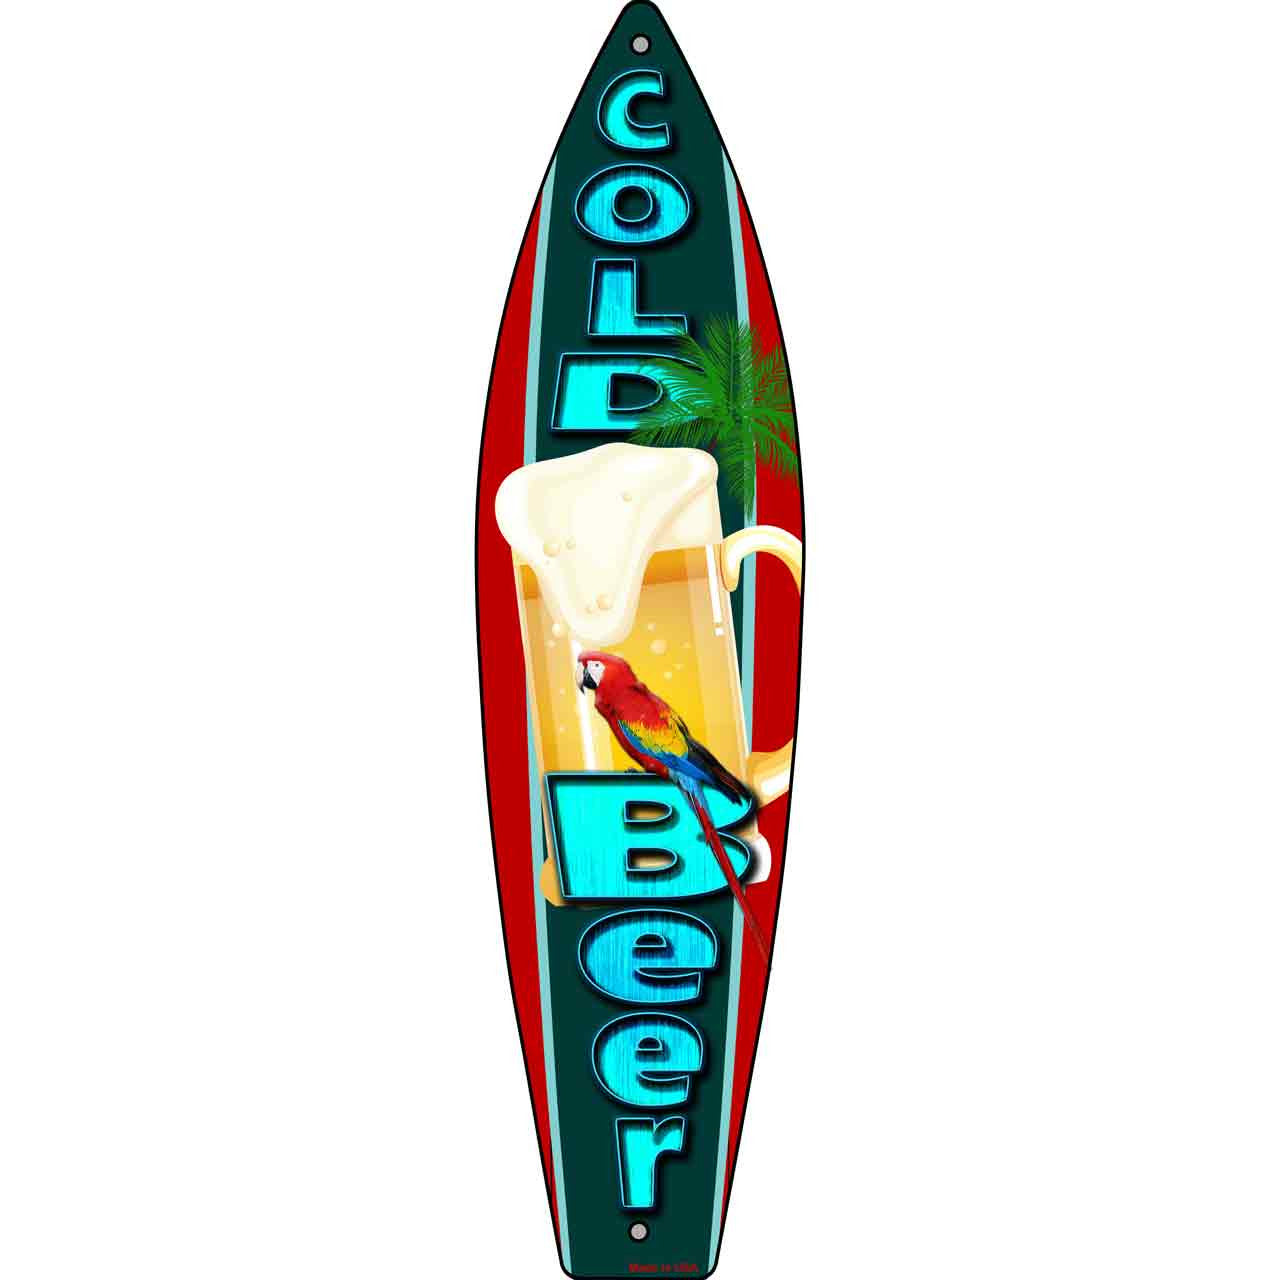 Cold Beer 17" x 4.5" Metal Novelty Surfboard Sign SB-050